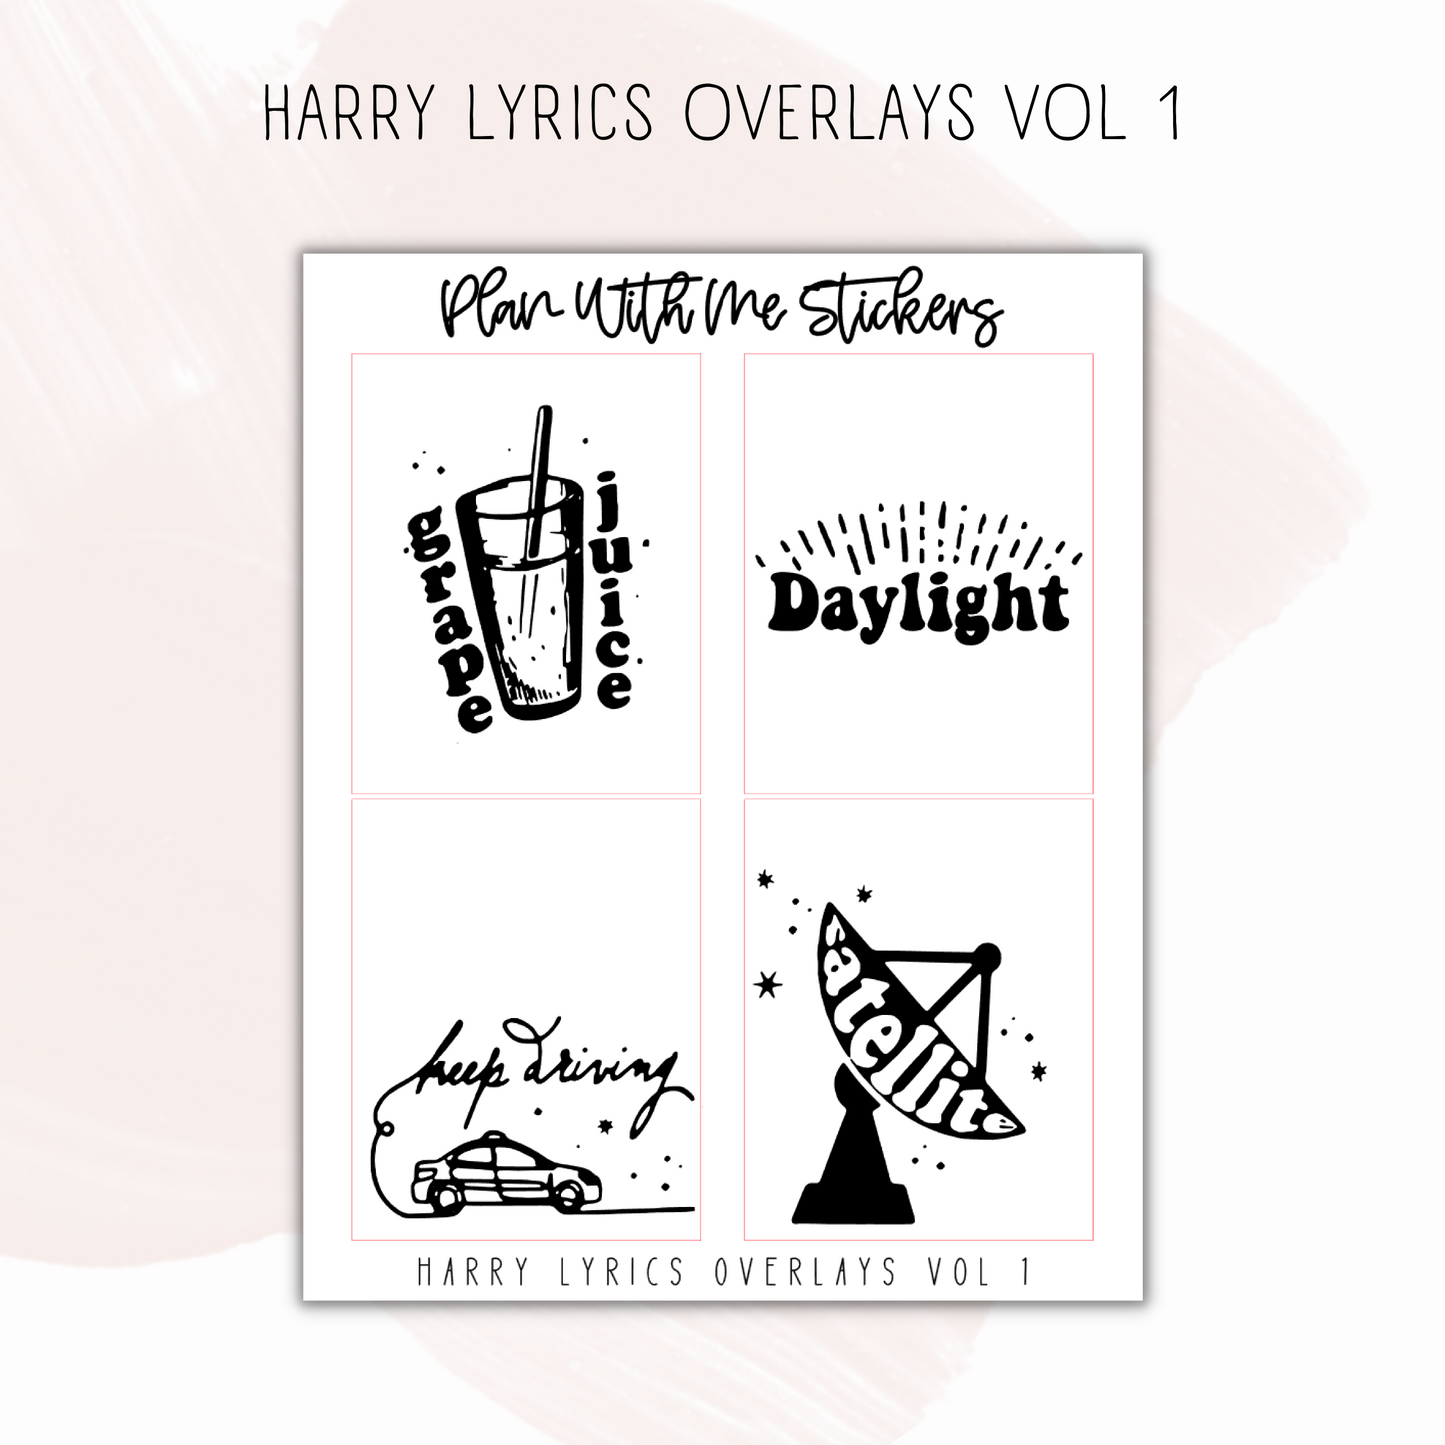 Harry Lyrics Overlays Vol 1